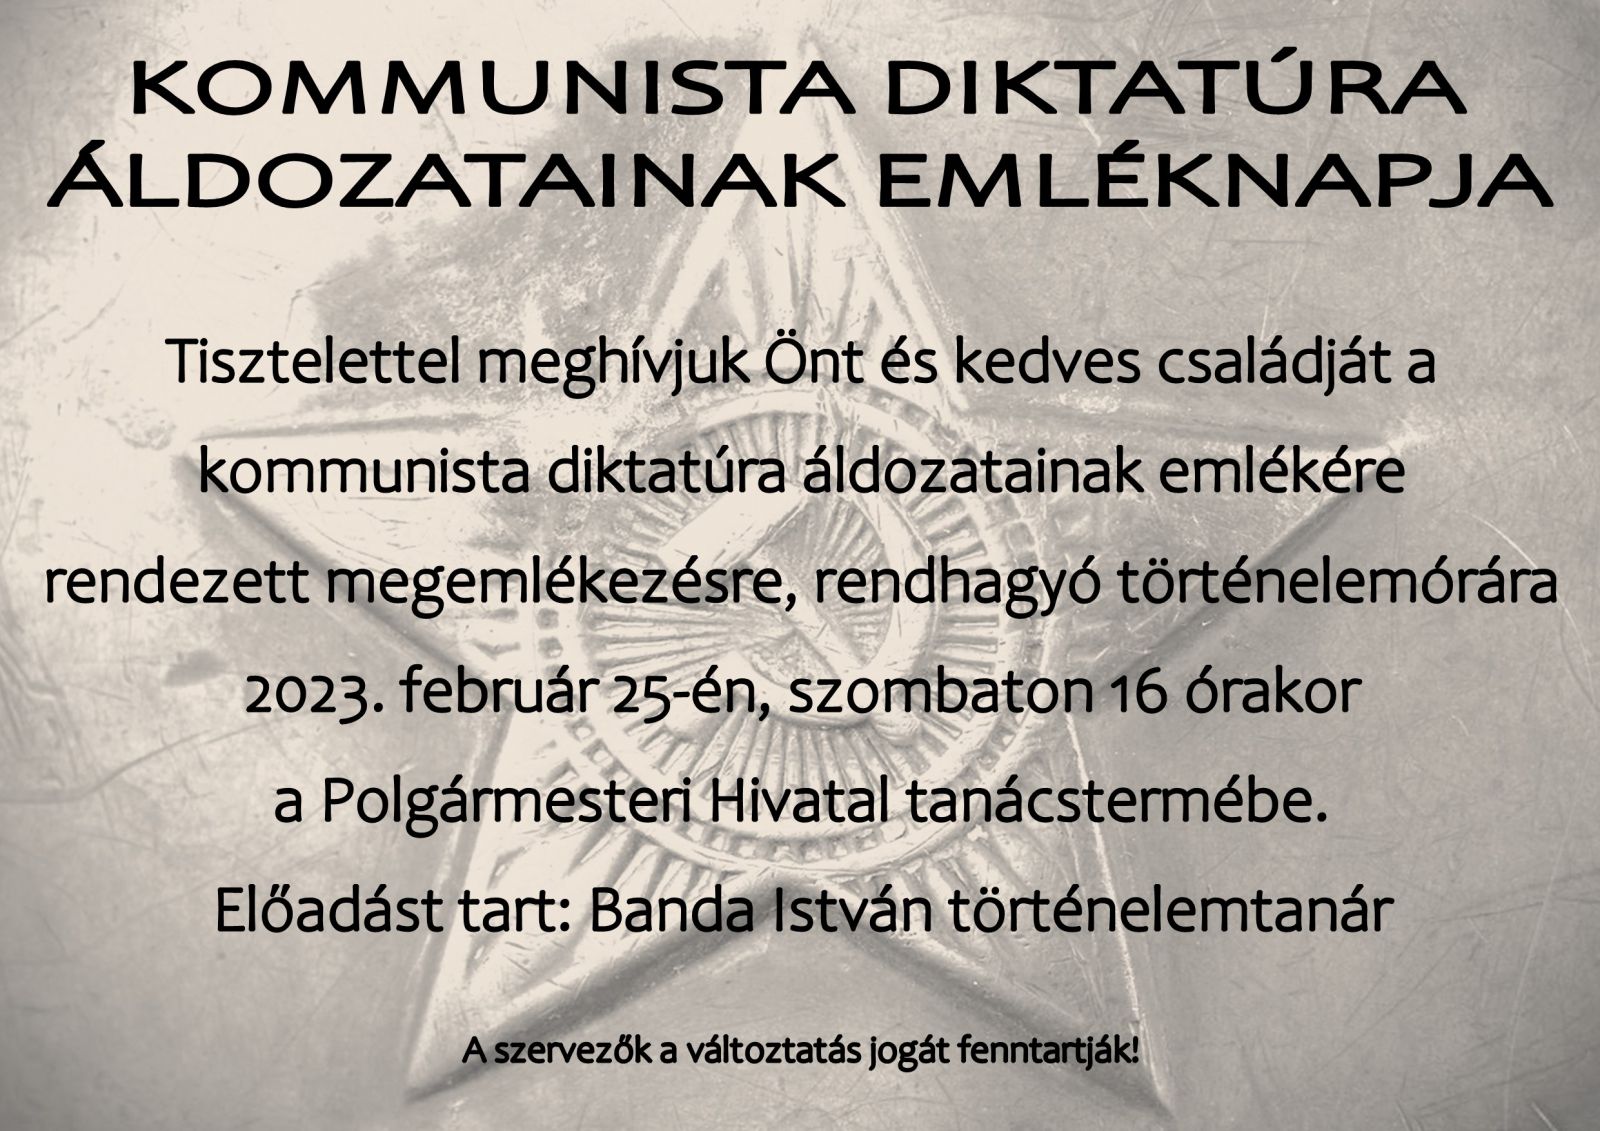 A kommunista diktatúrák áldozatainak emléknapja